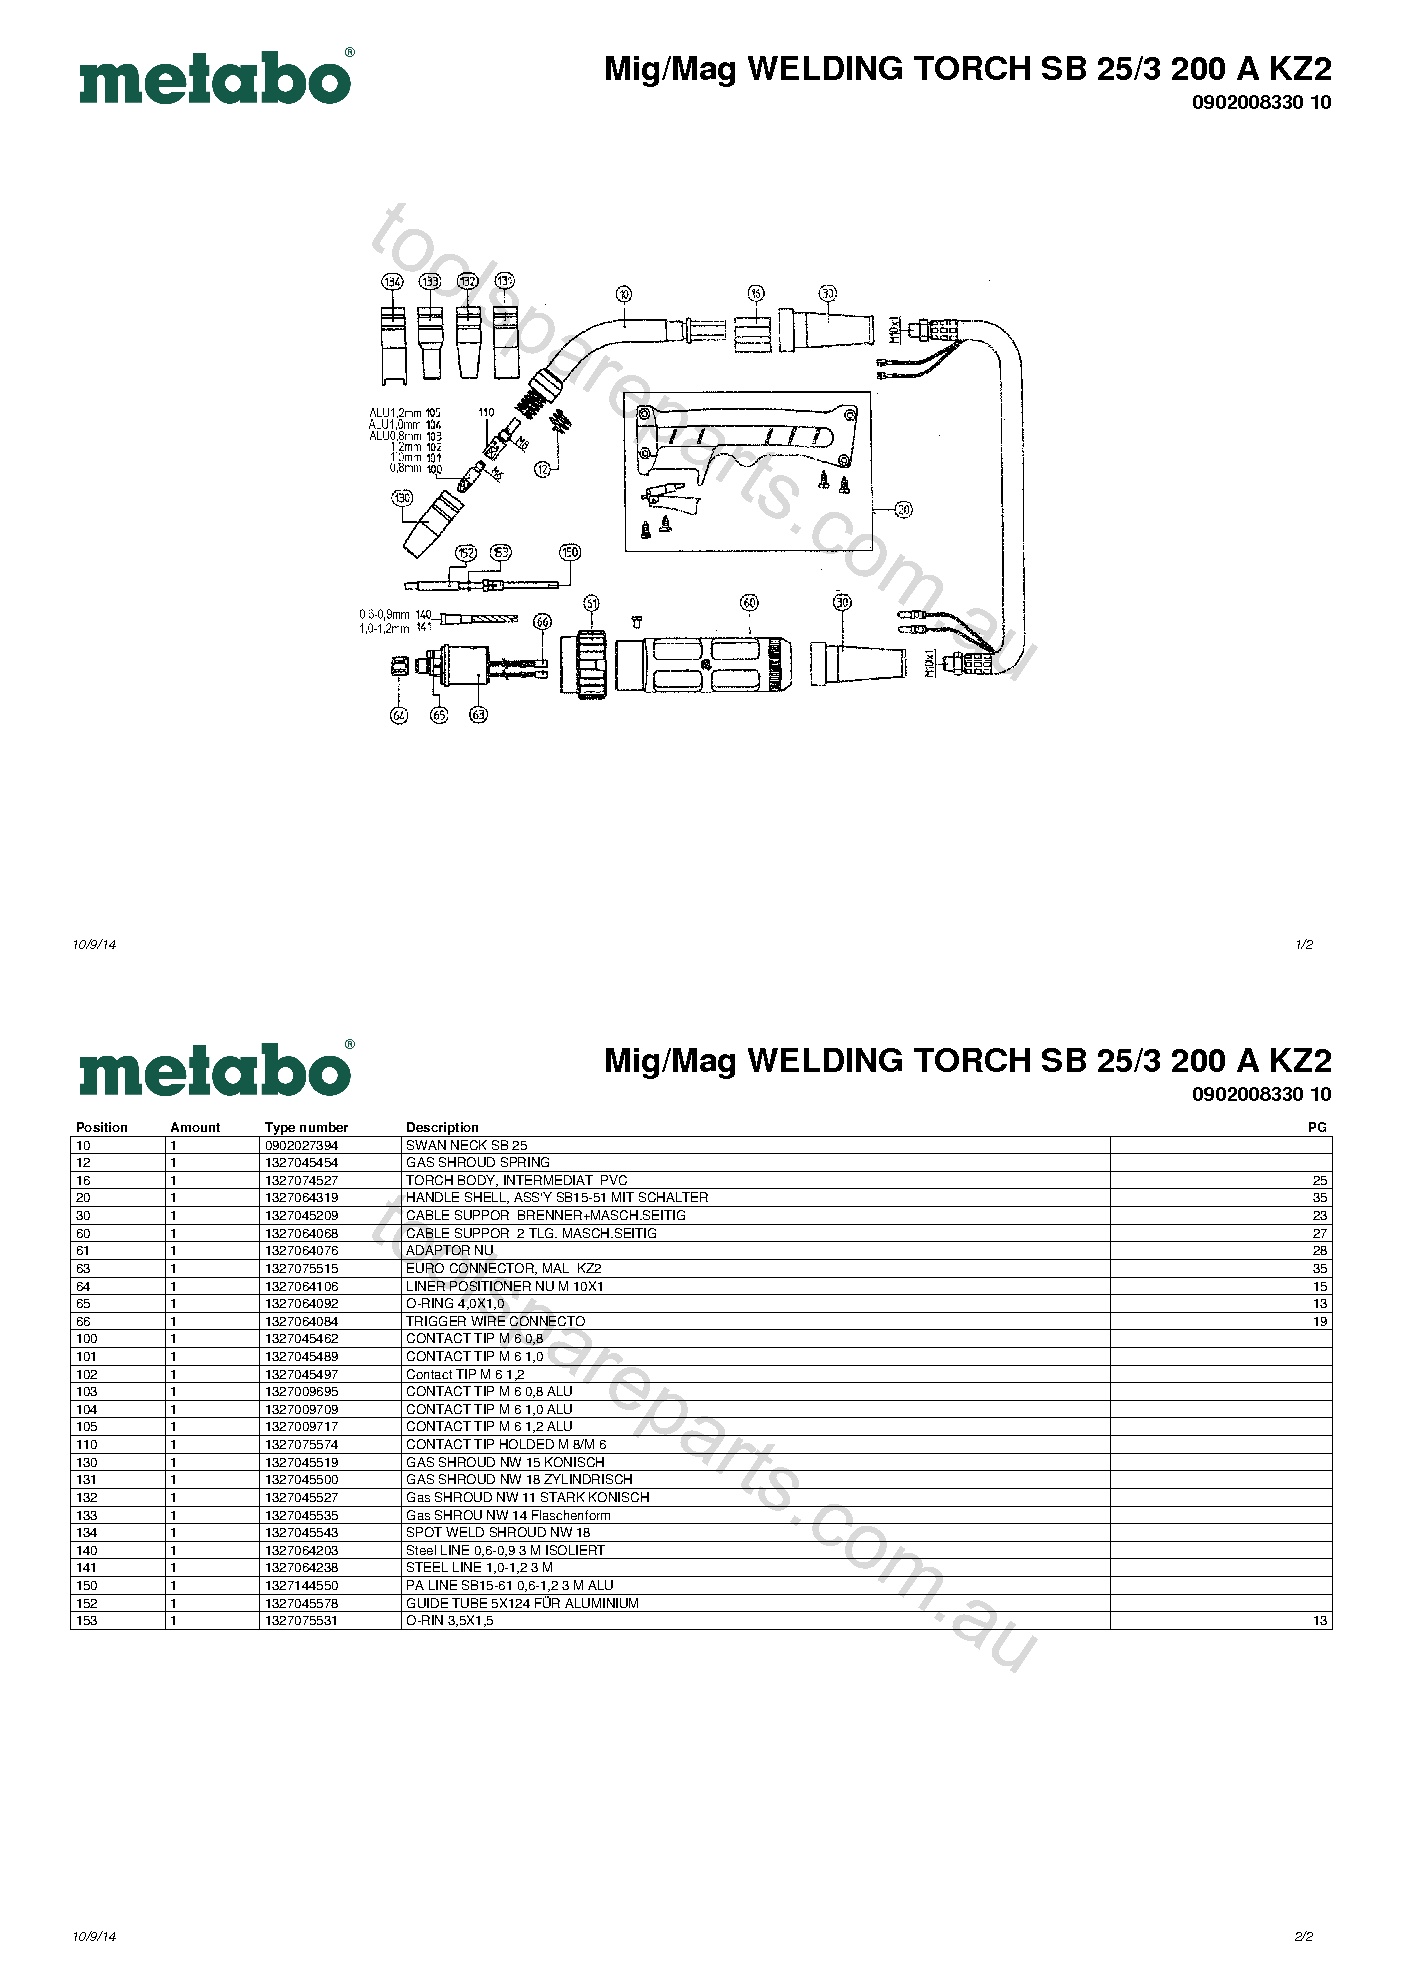 Metabo Mig/Mag WELDING TORCH SB 25/3 200 A KZ2 0902008330 10  Diagram 1